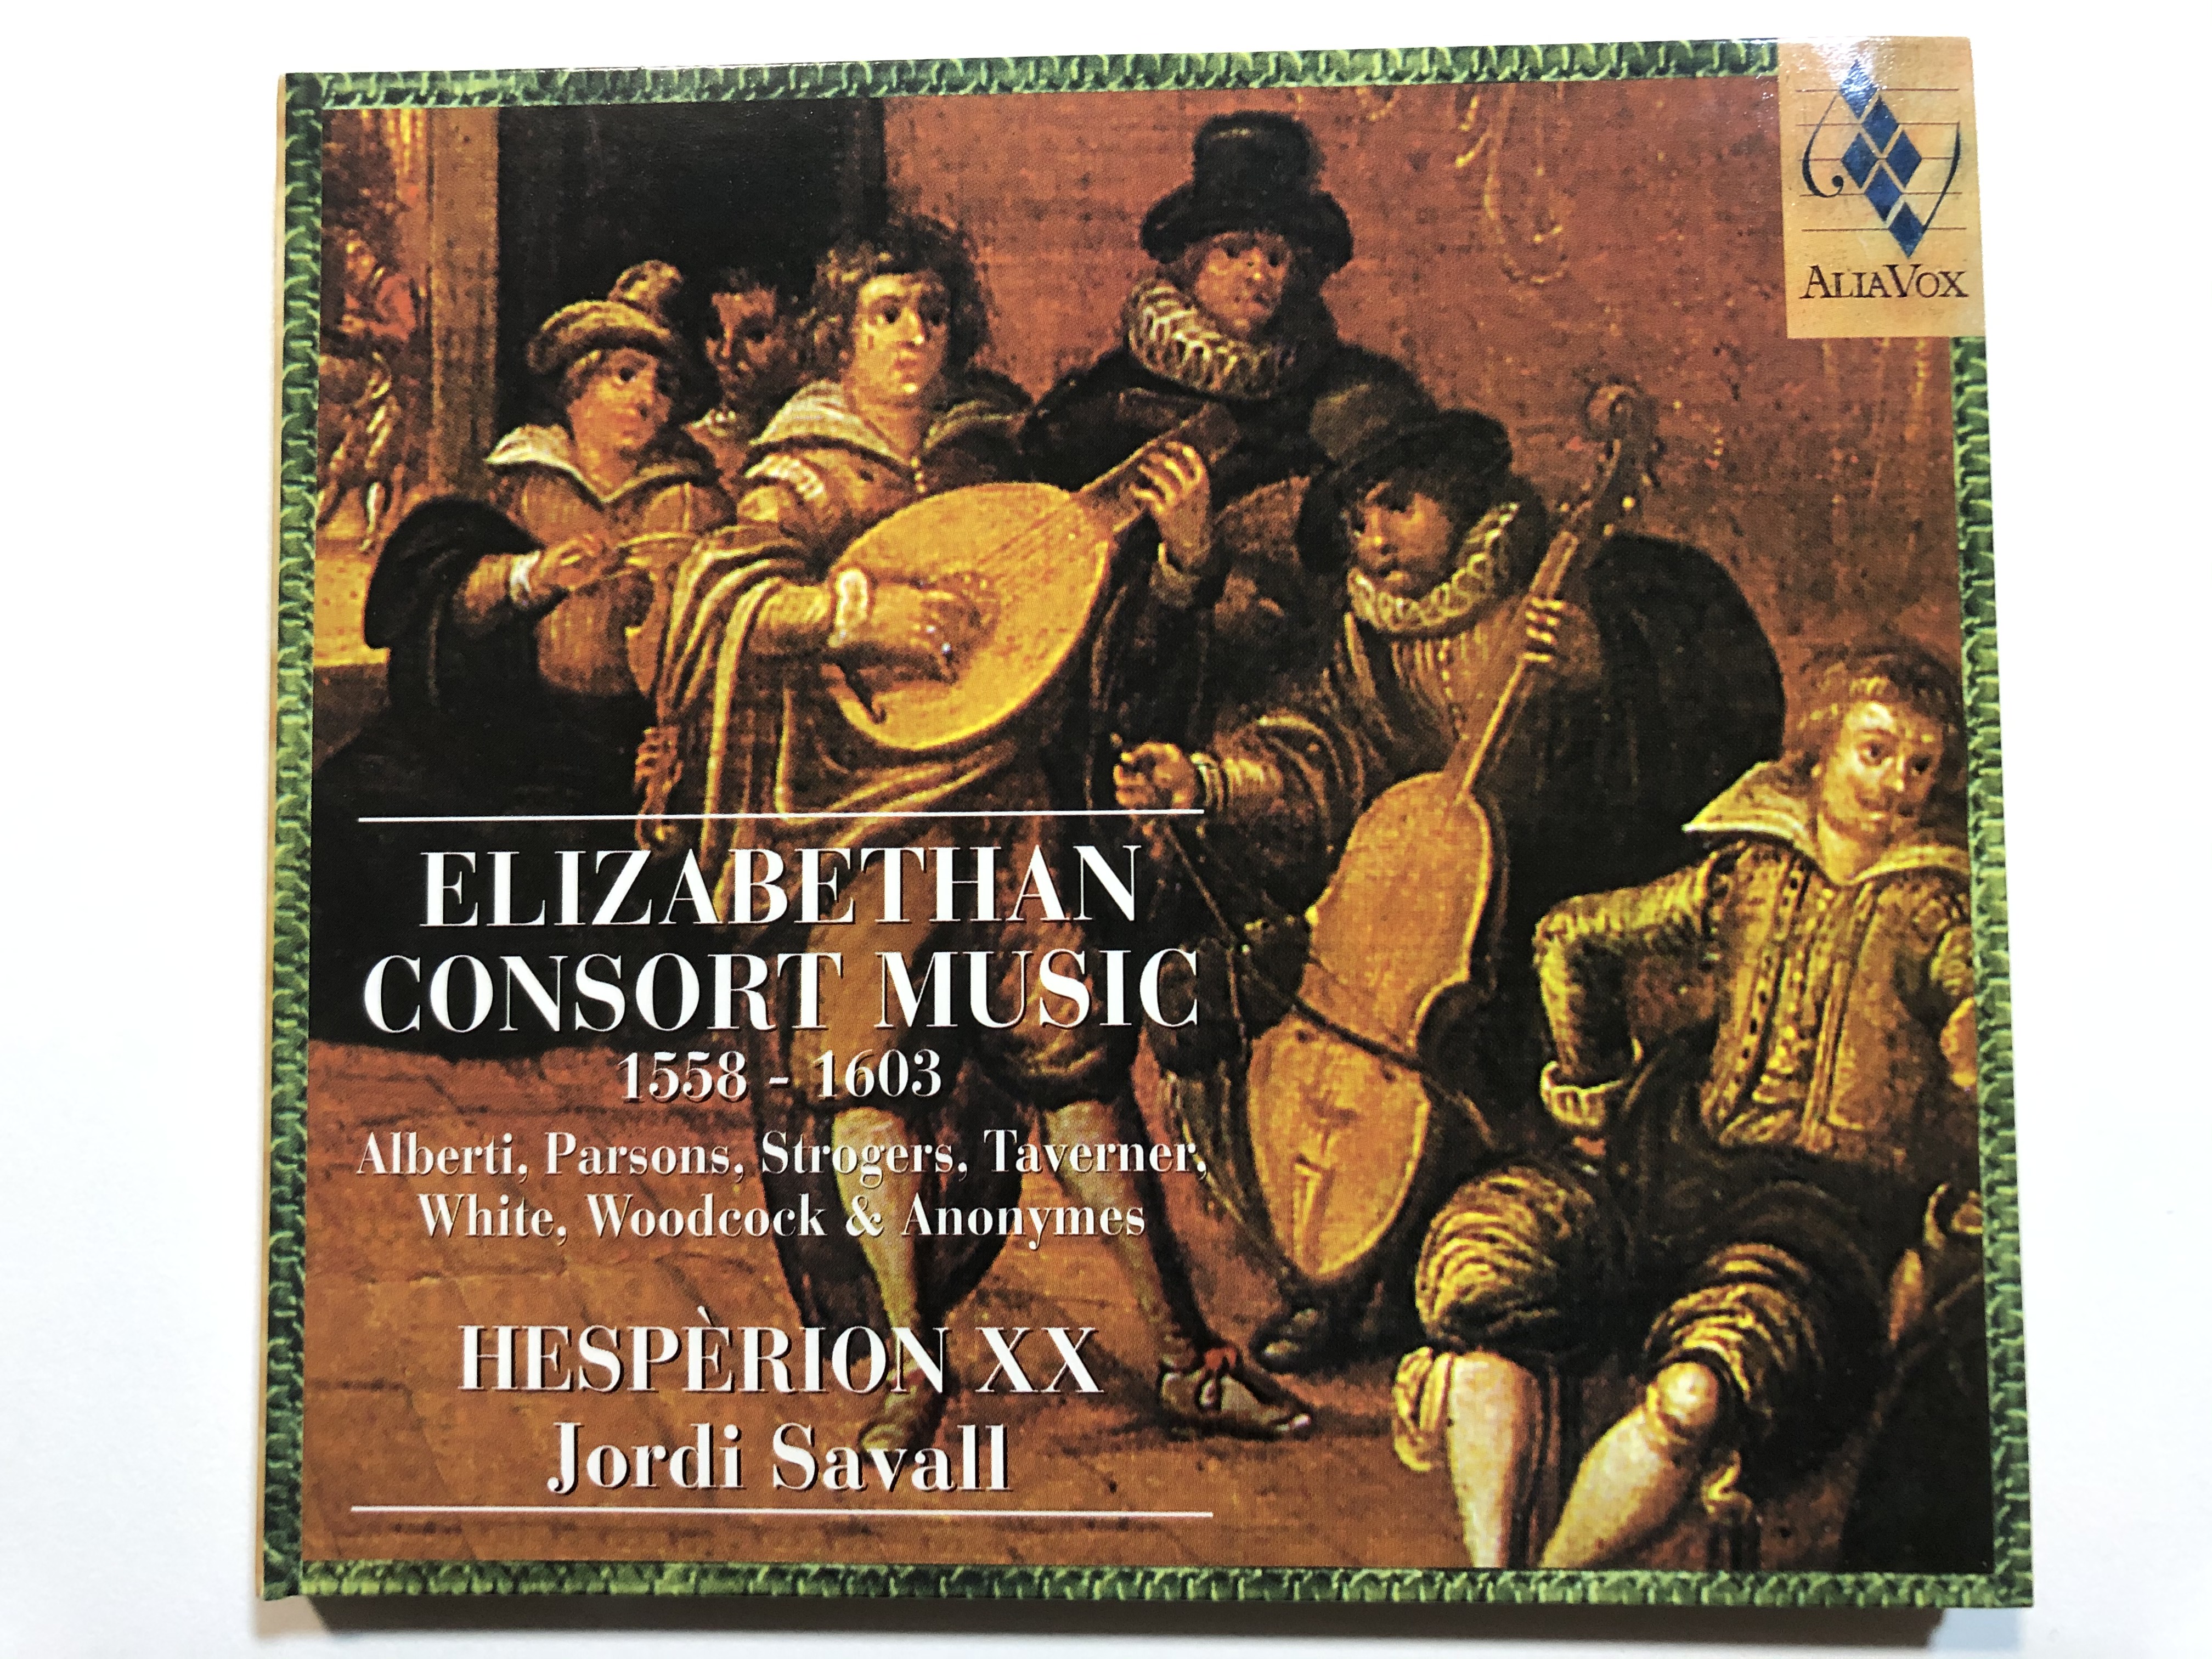 elizabethan-consort-music-1558-1603-alberti-parsons-strogers-taverner-white-woodcock-anonymes-hesp-rion-xx-jordi-savall-alia-vox-audio-cd-1998-av9804-1-.jpg